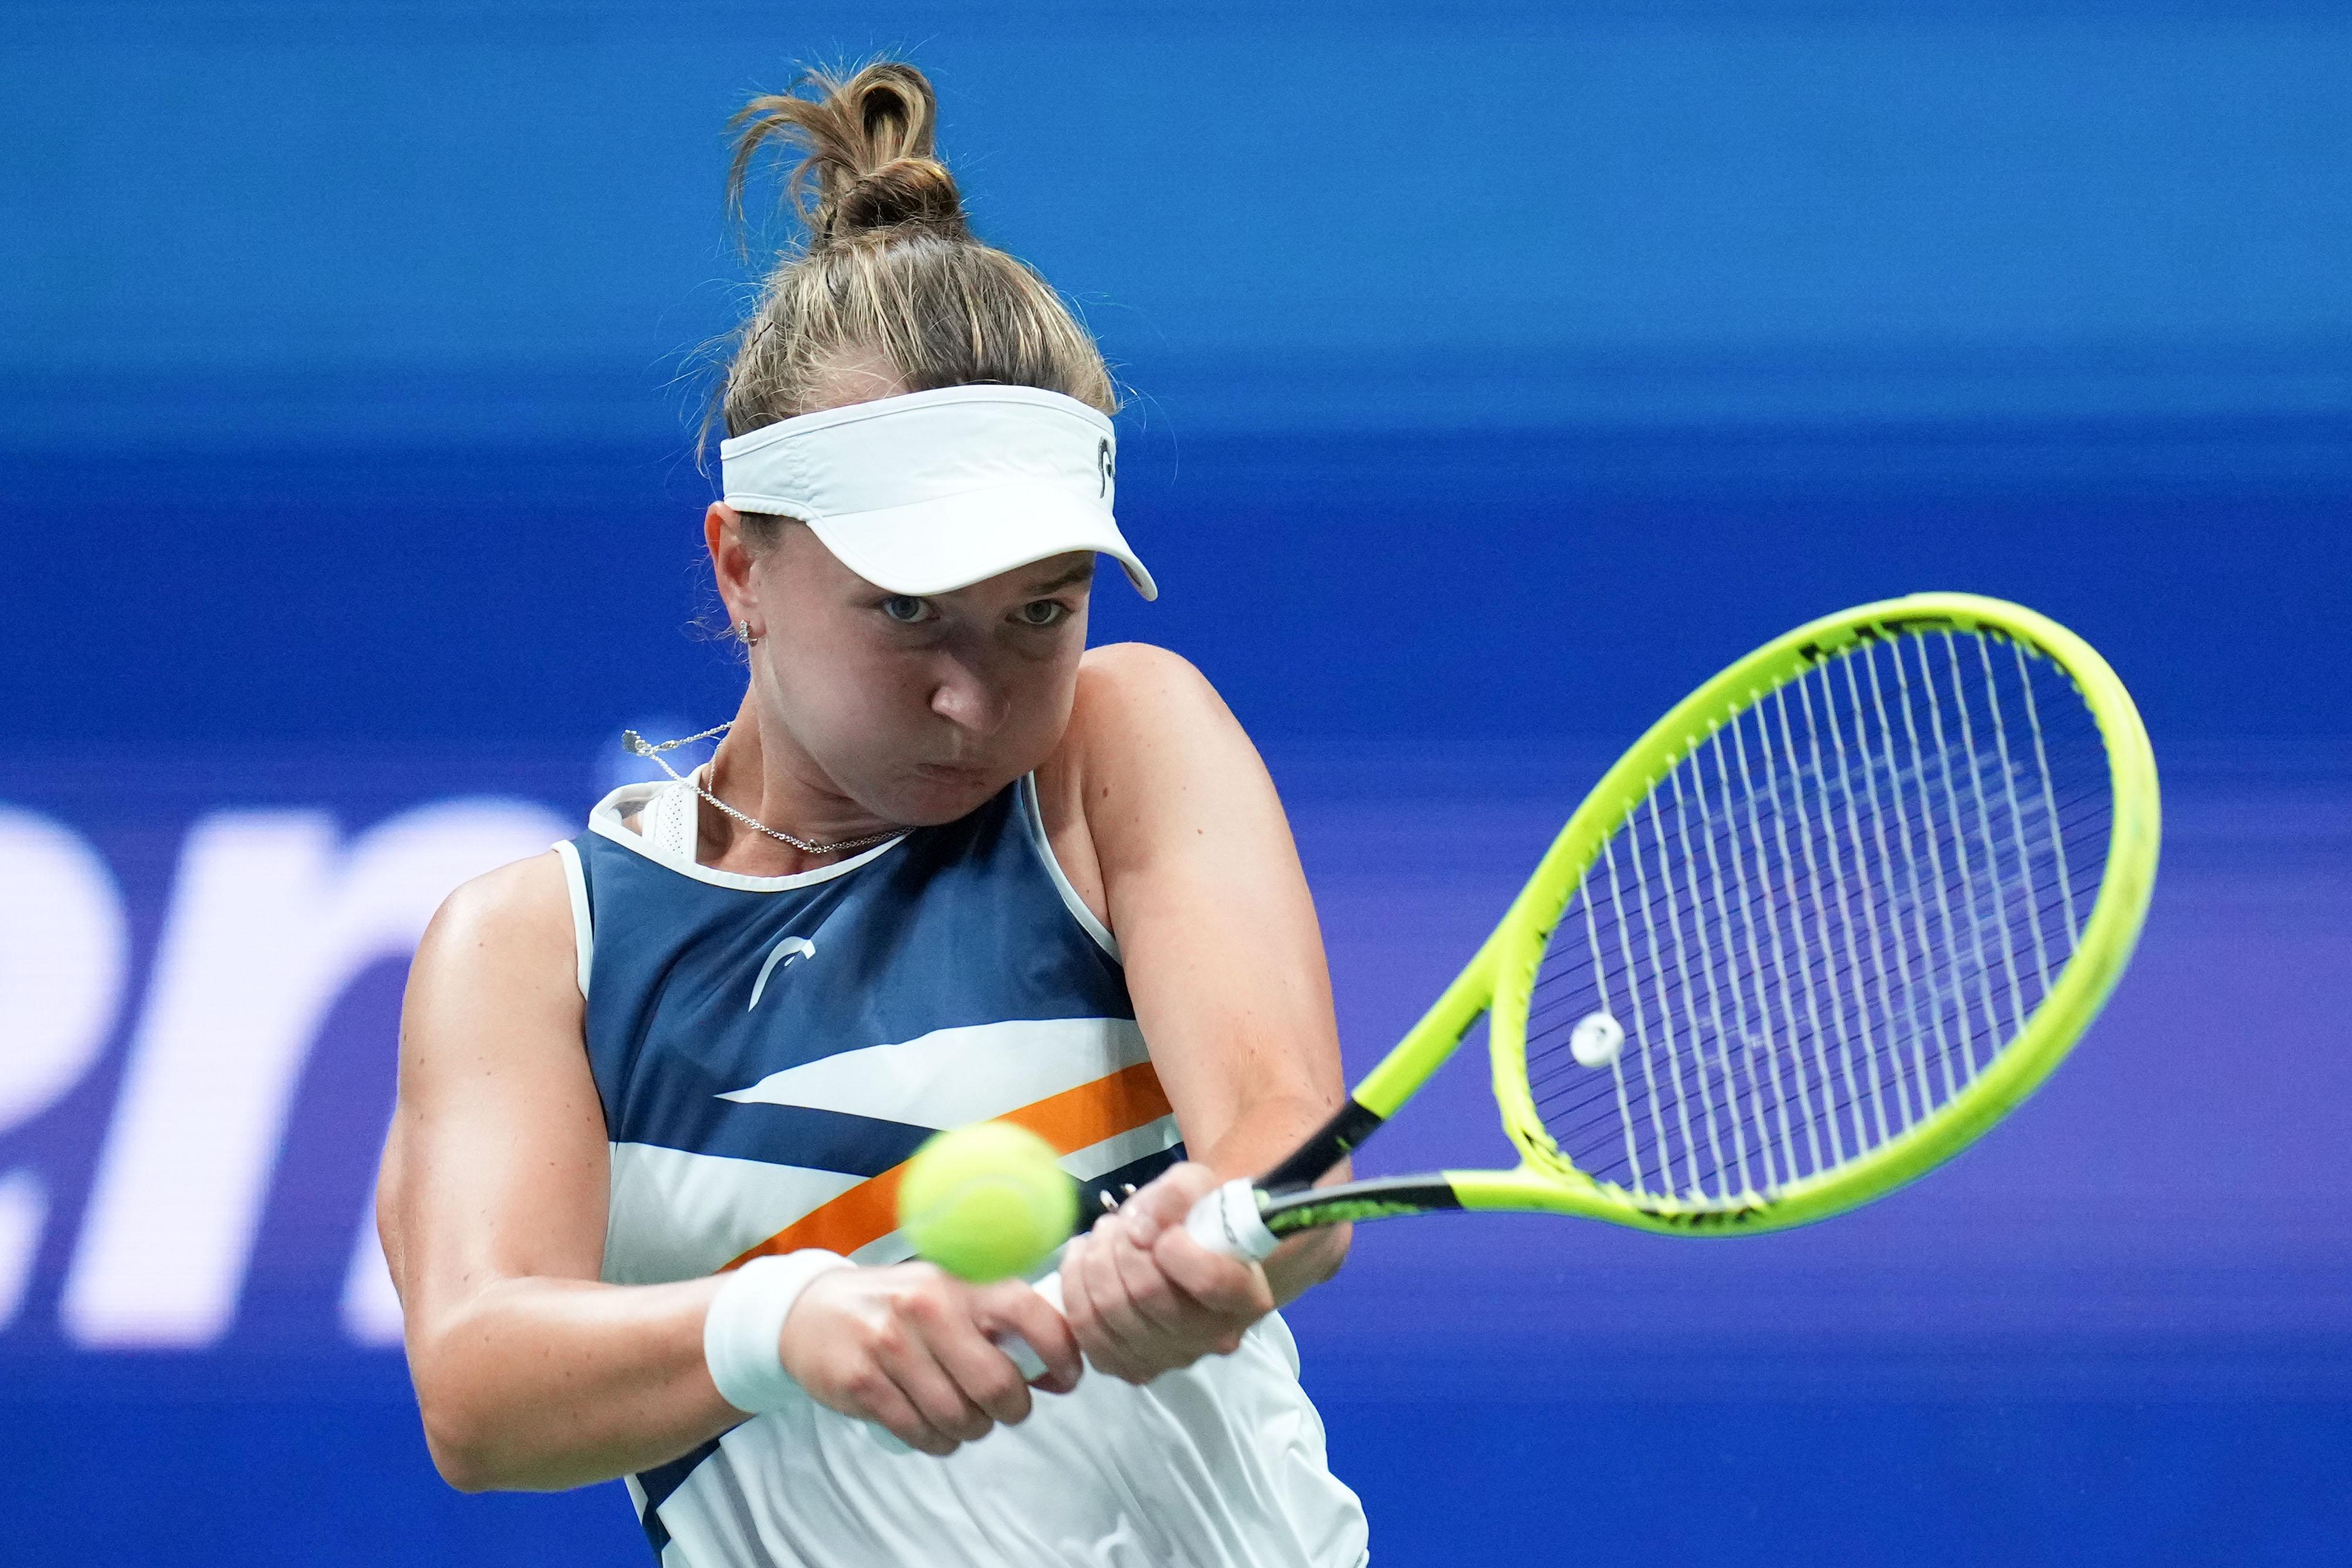 Viktorija Golubic vs Barbora Krejcikova Odds, Prediction & Betting Trends for 2022 Wimbledon Women's Round 2 Match